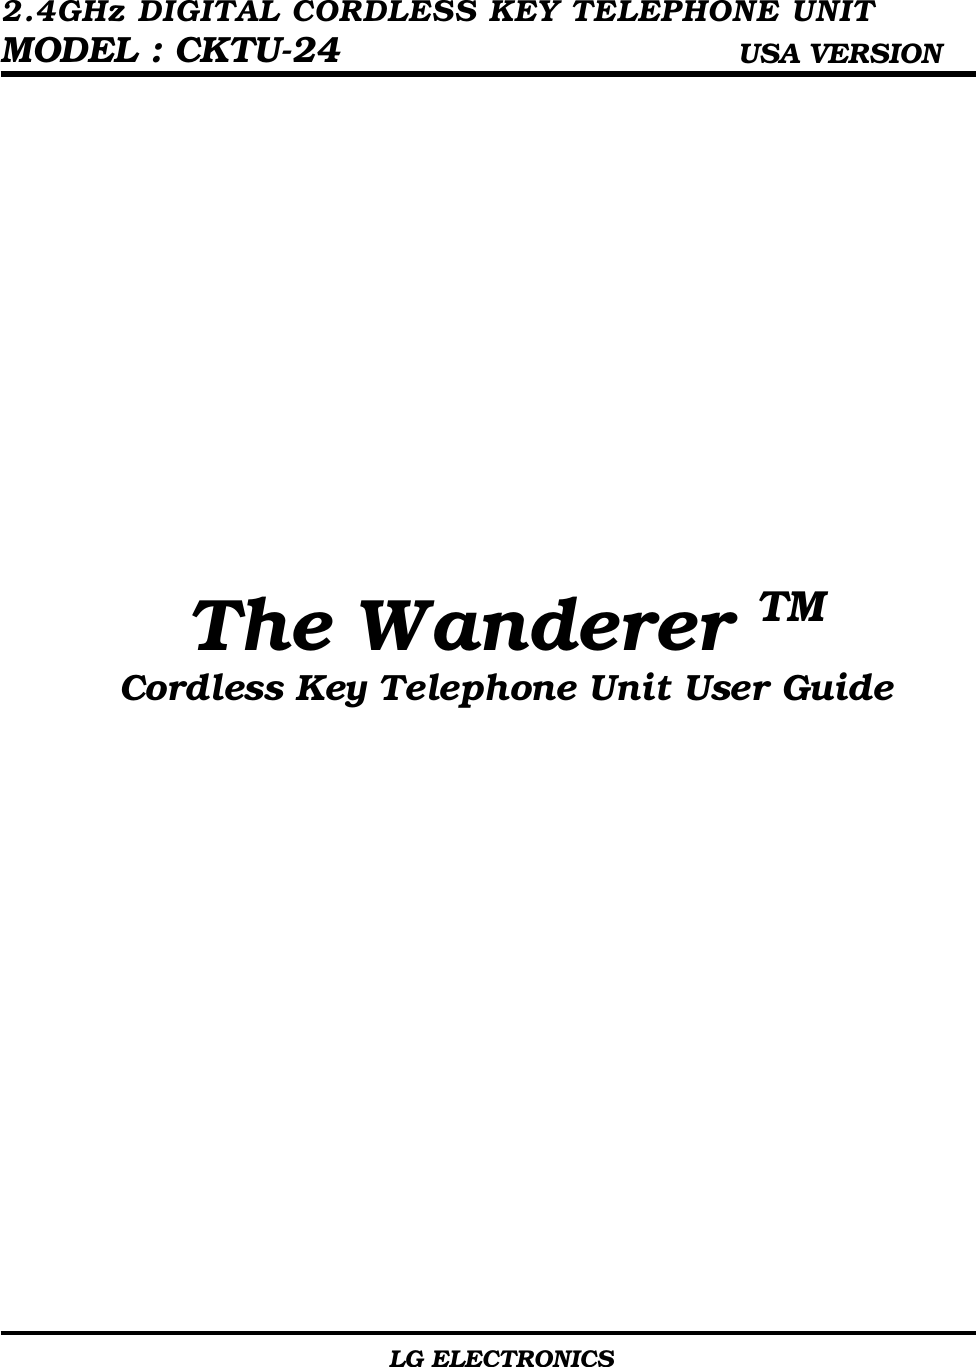  2.4GHz DIGITAL CORDLESS KEY TELEPHONE UNIT   MODEL : CKTU-24                      USA VERSION                                        LG ELECTRONICS                                        The Wanderer TM Cordless Key Telephone Unit User Guide                